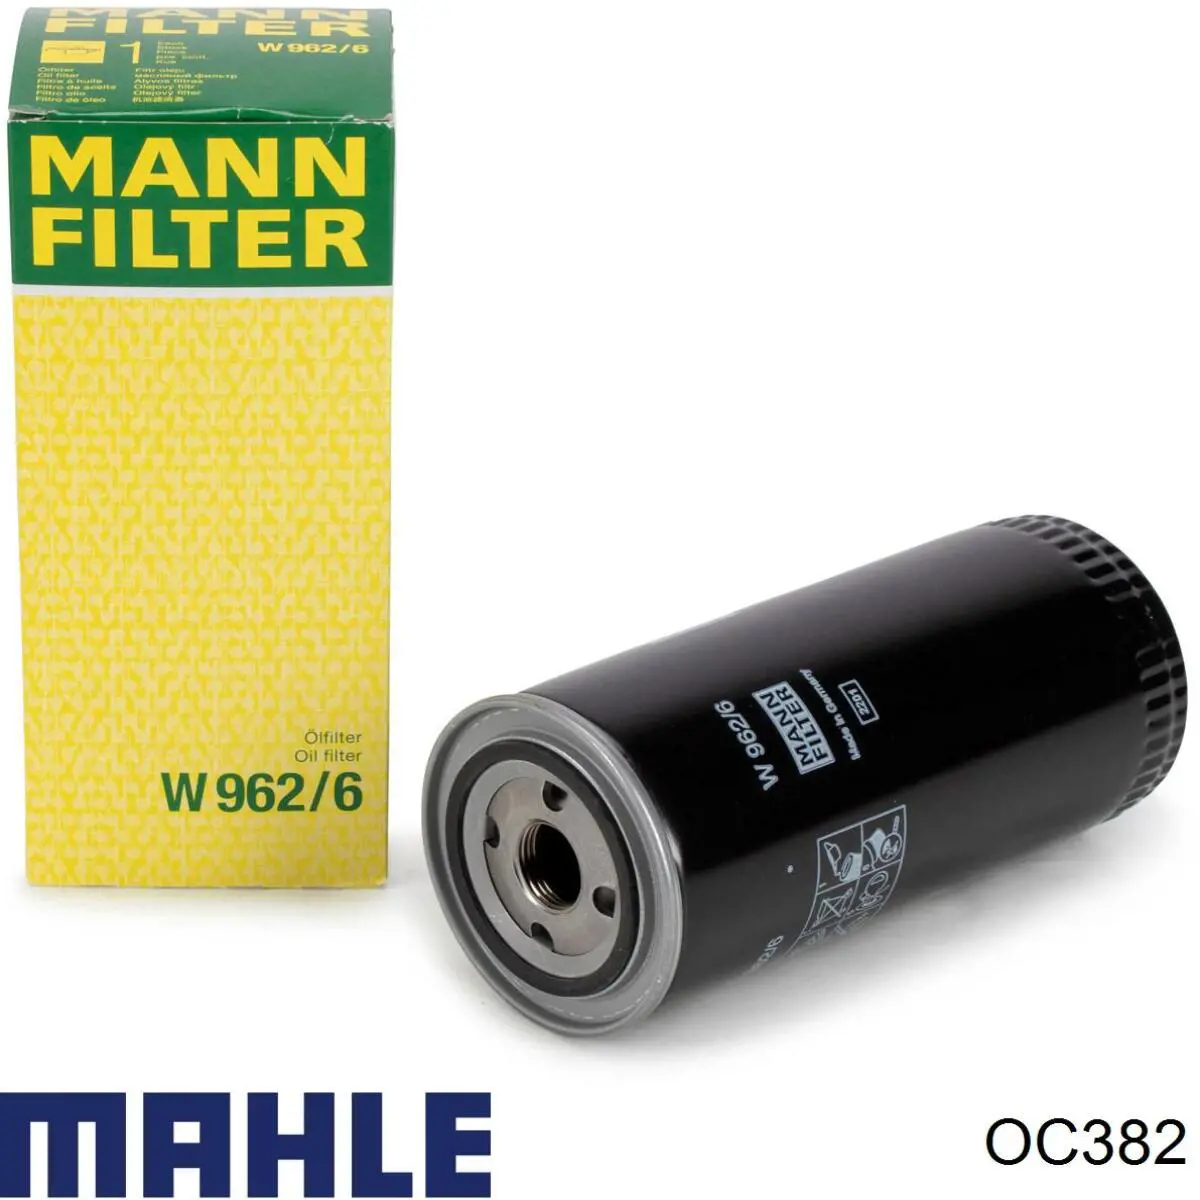 OC382 Mahle Original filtro de aceite